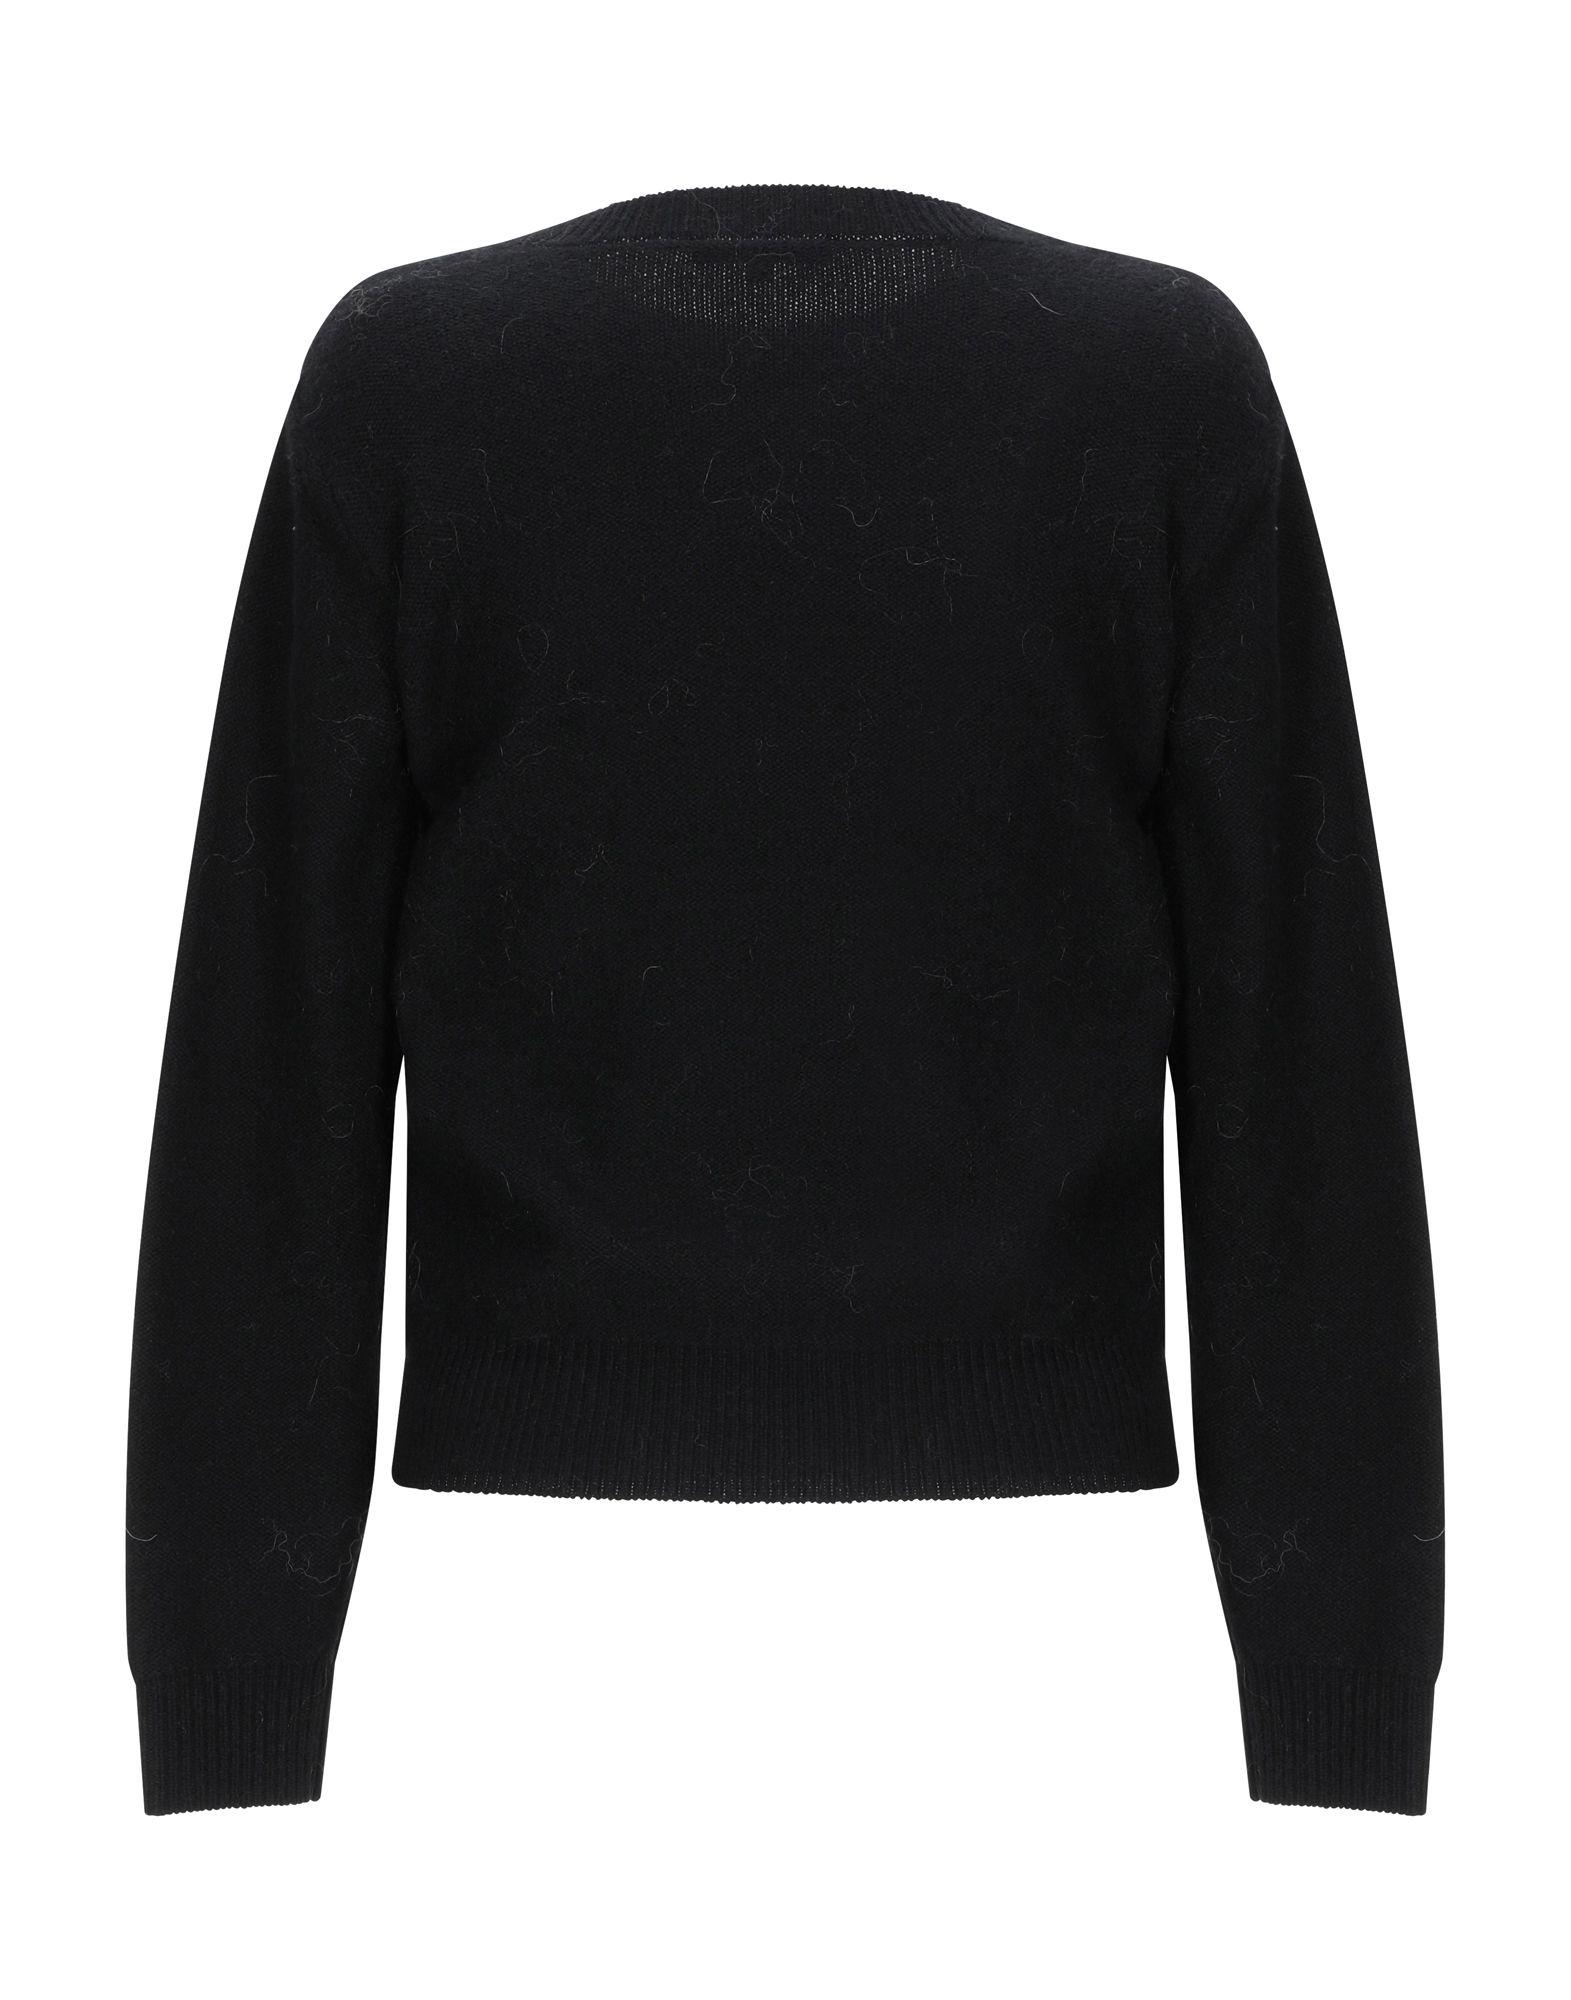 Tara Jarmon Synthetic Sweater in Black - Lyst